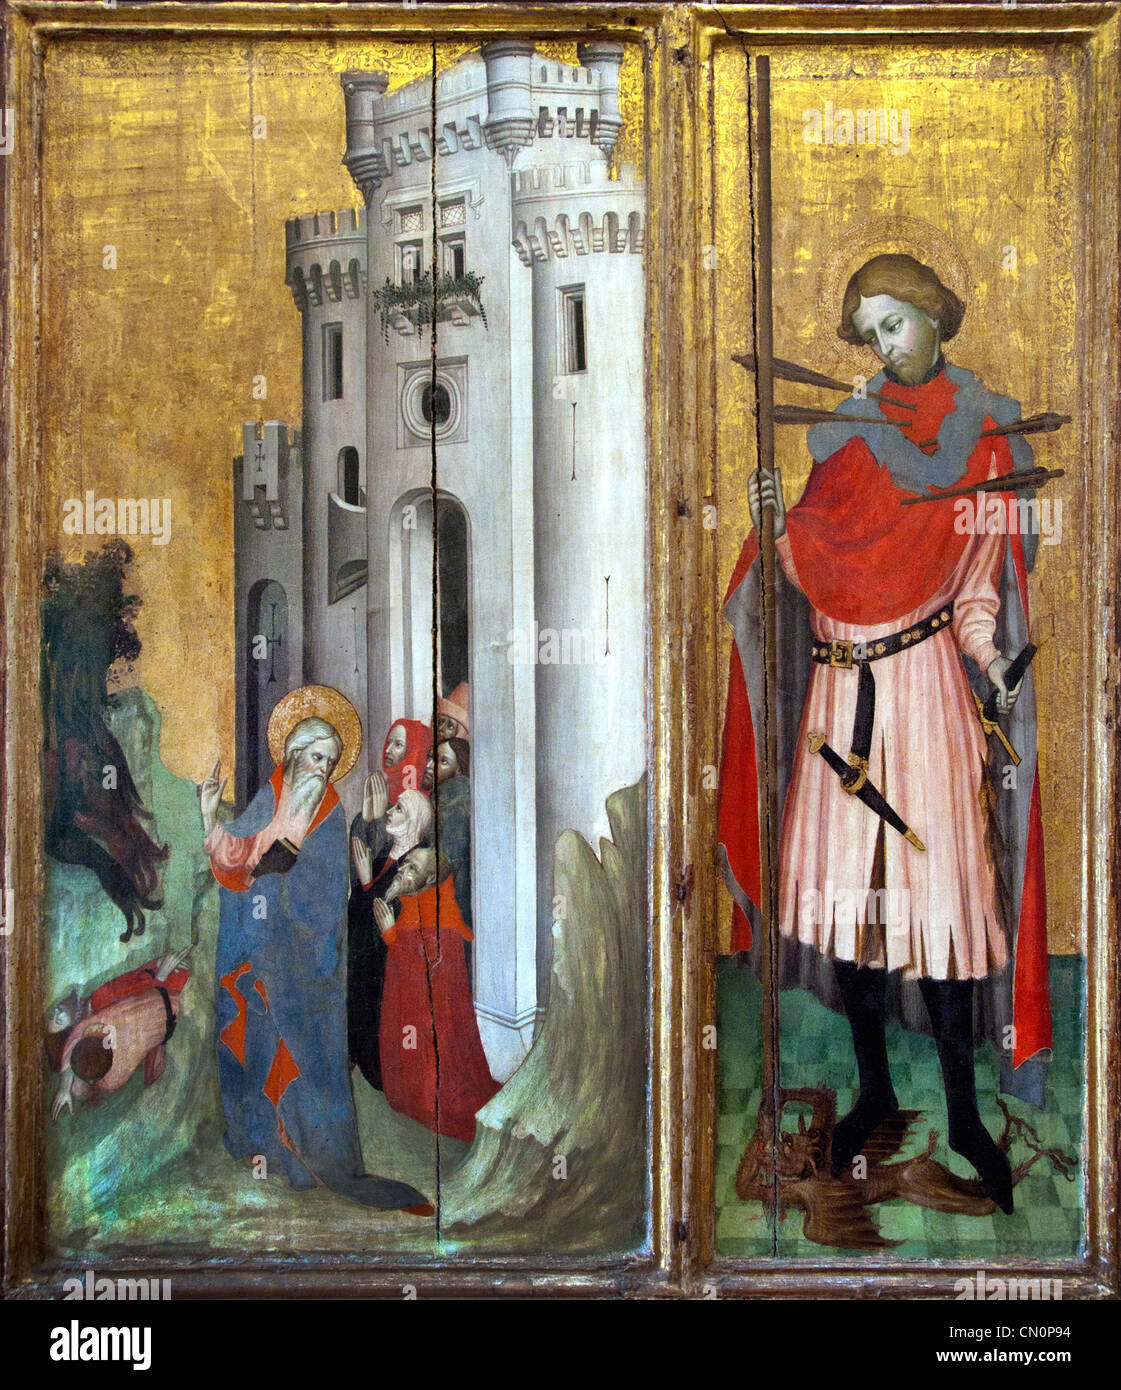 ALTARBILD DE THOUZON France 1410 eine Szene von Saint Andrew Leben und Sankt Sebastian einen Drachen tötet. Stockfoto